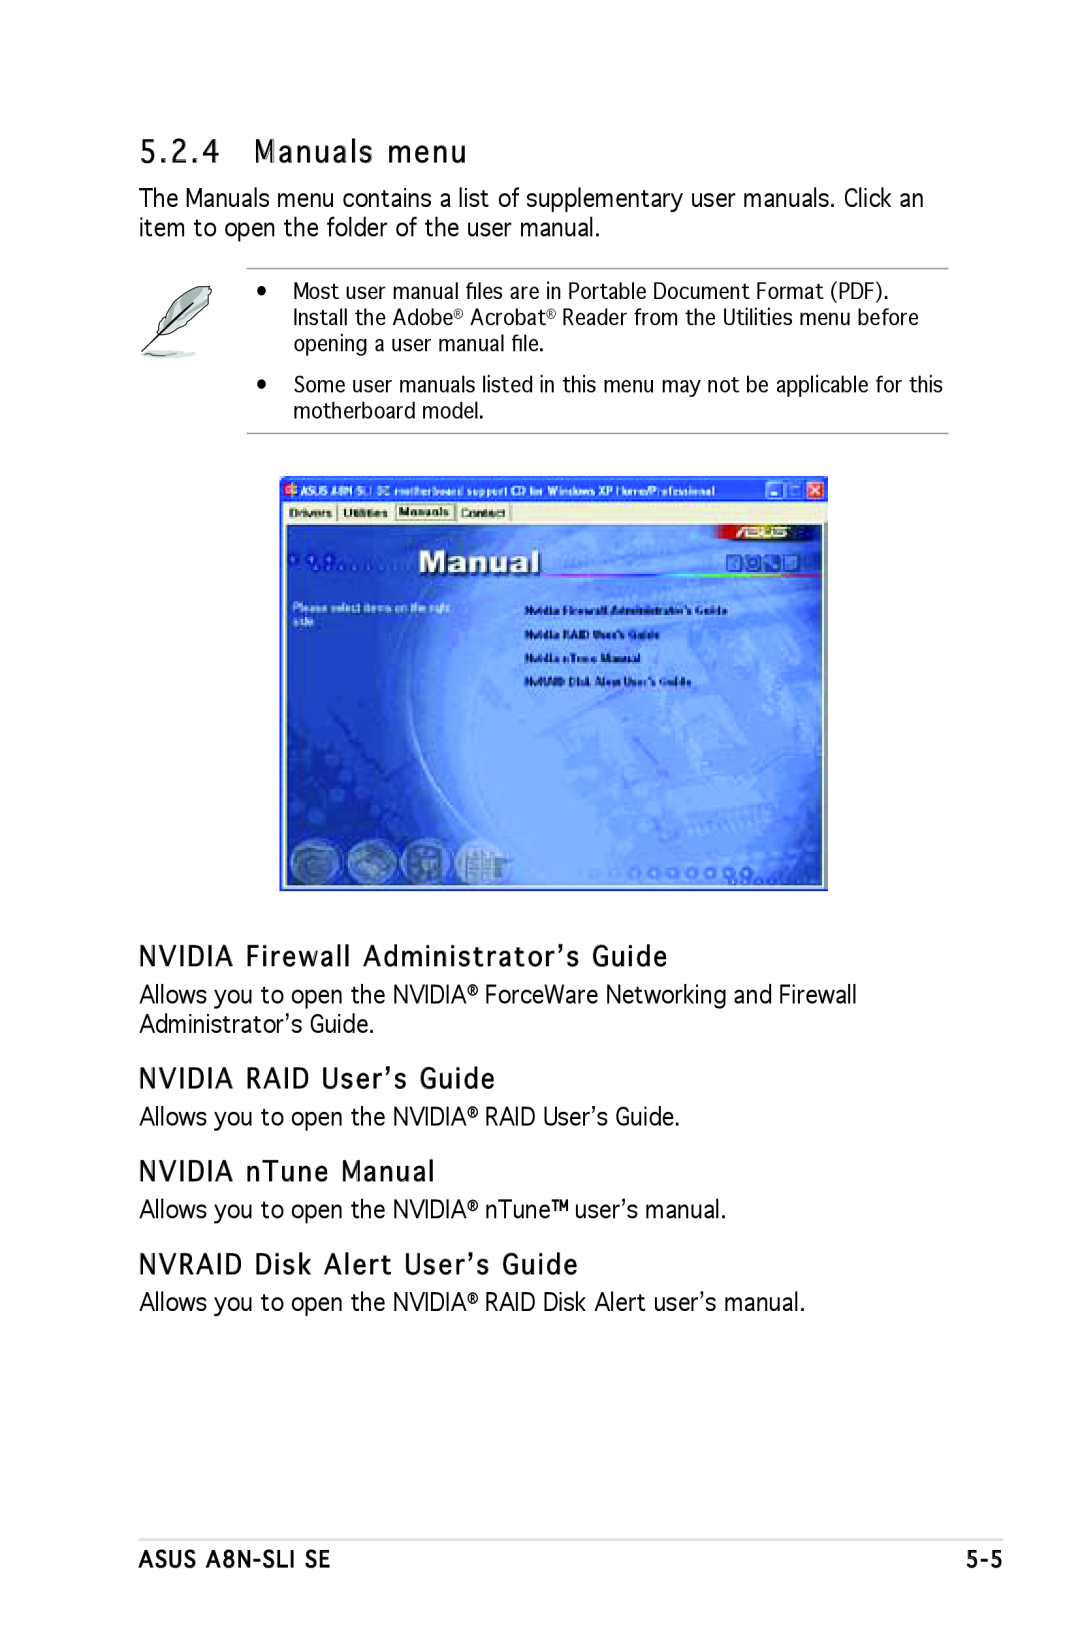 Asus A8N-SLI SE manual Manuals menu, NVIDIA Firewall Administratorʼs Guide, NVIDIA RAID Userʼs Guide, NVIDIA nTune Manual 